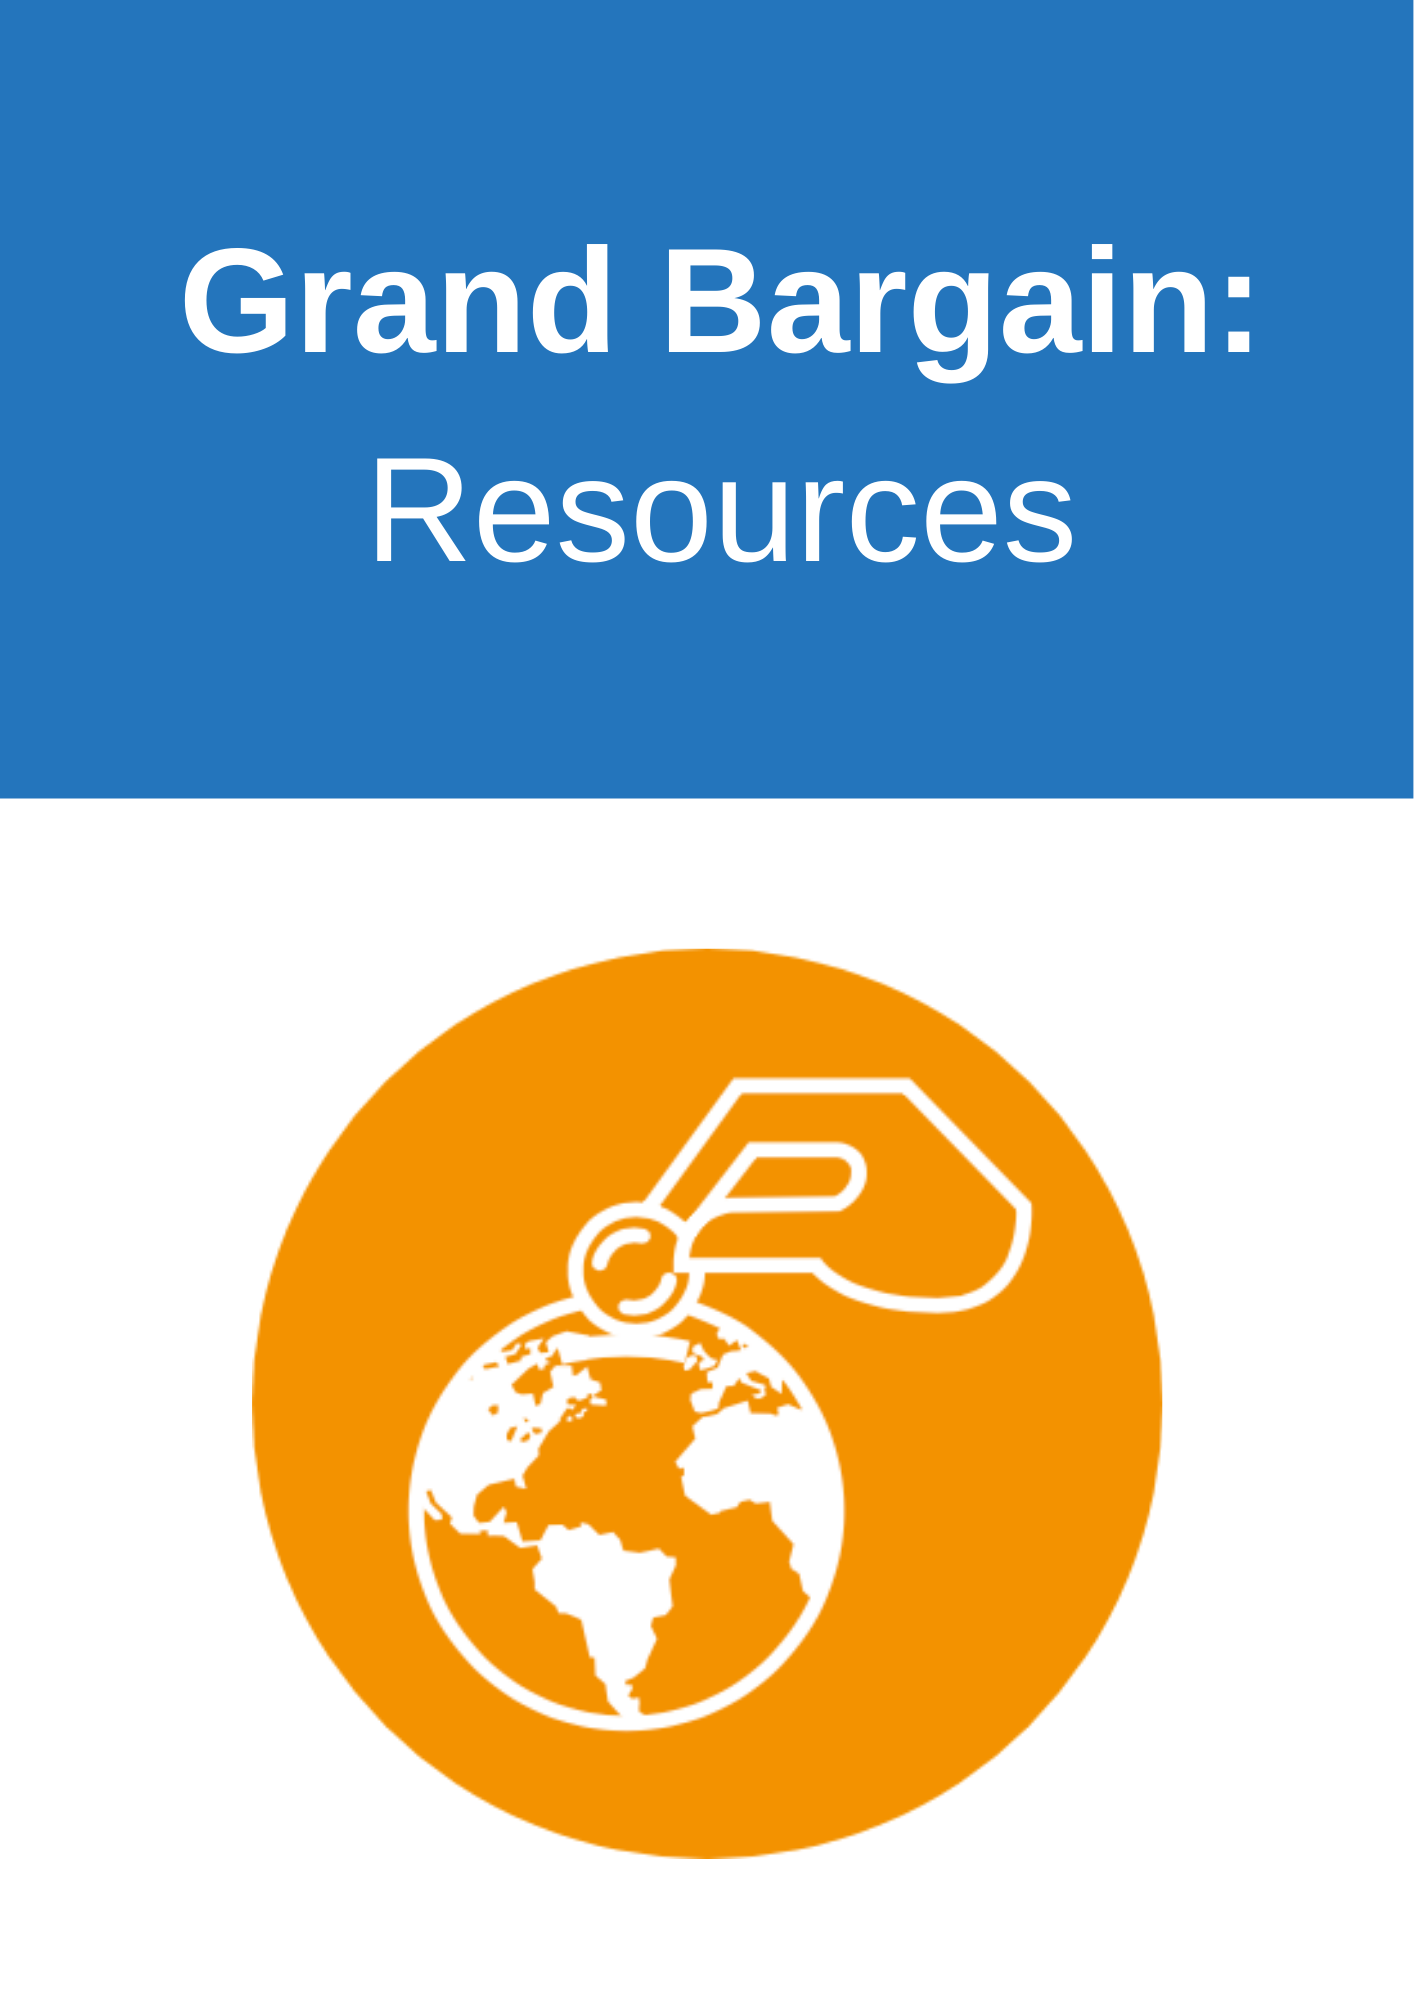 Grand Bargain resources